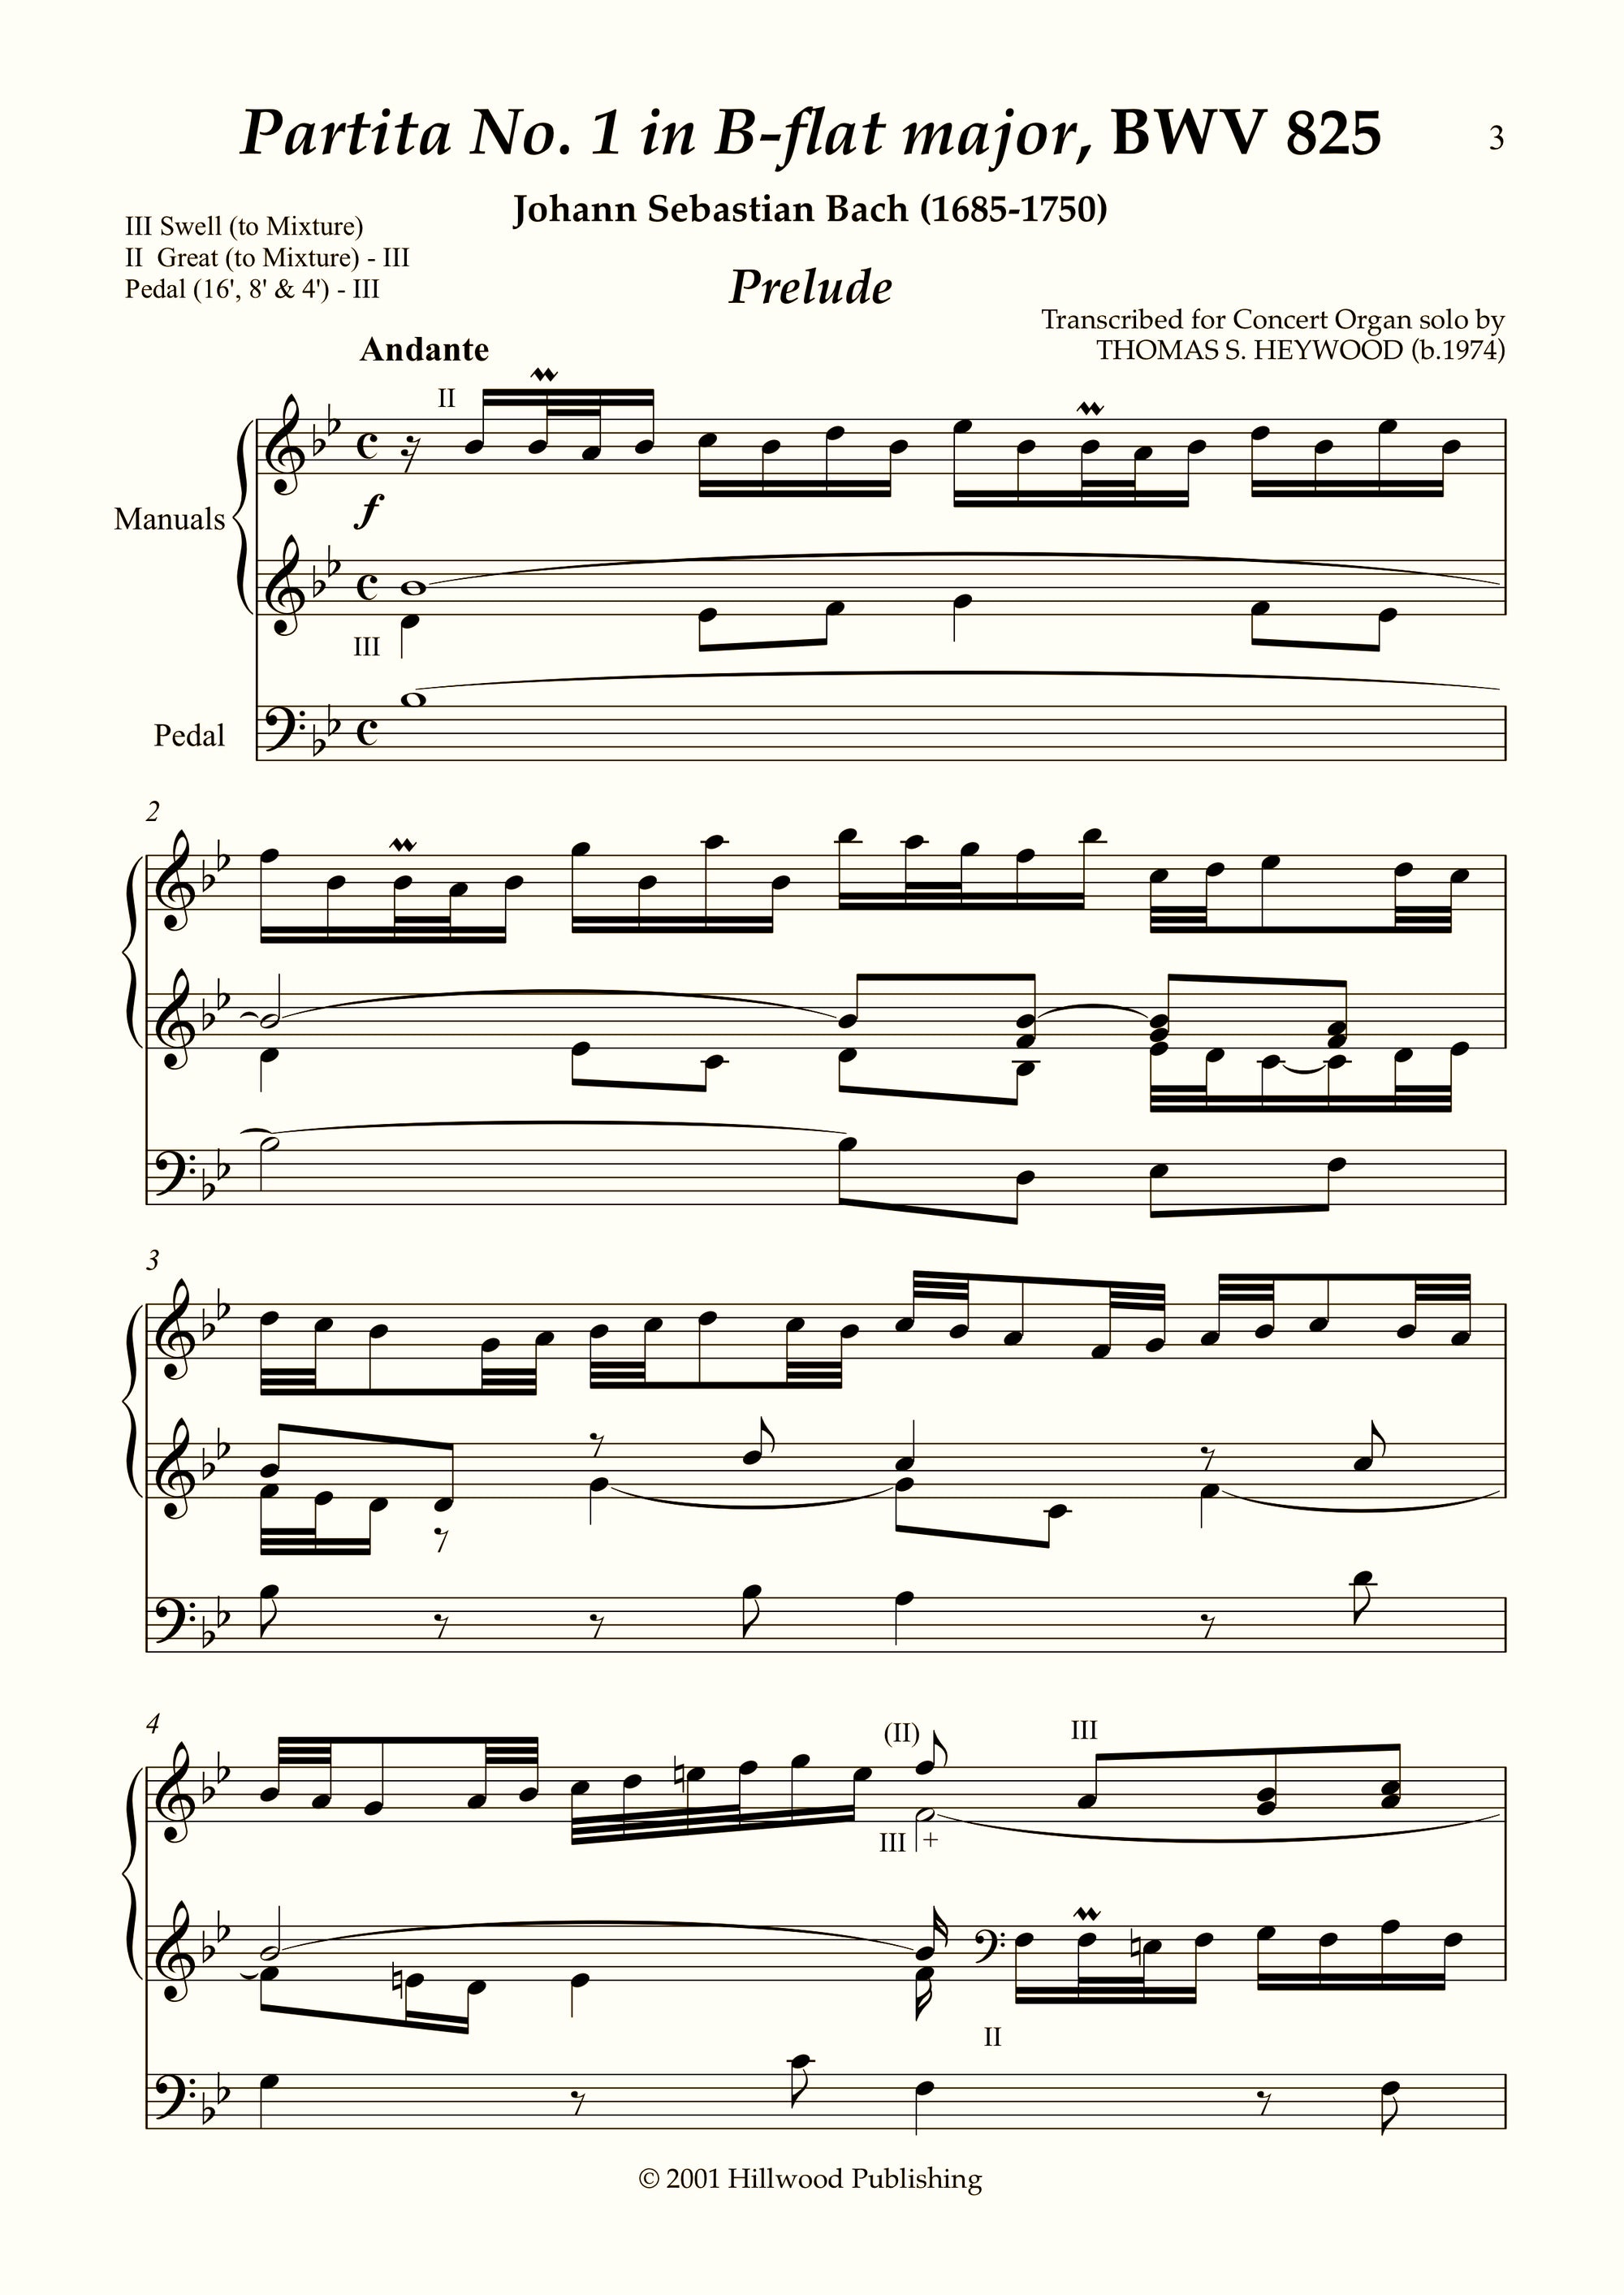 Bach/Heywood - Prelude from Partita No. 1 in B-flat major, BWV 825 (Score) | Thomas Heywood | Concert Organ International